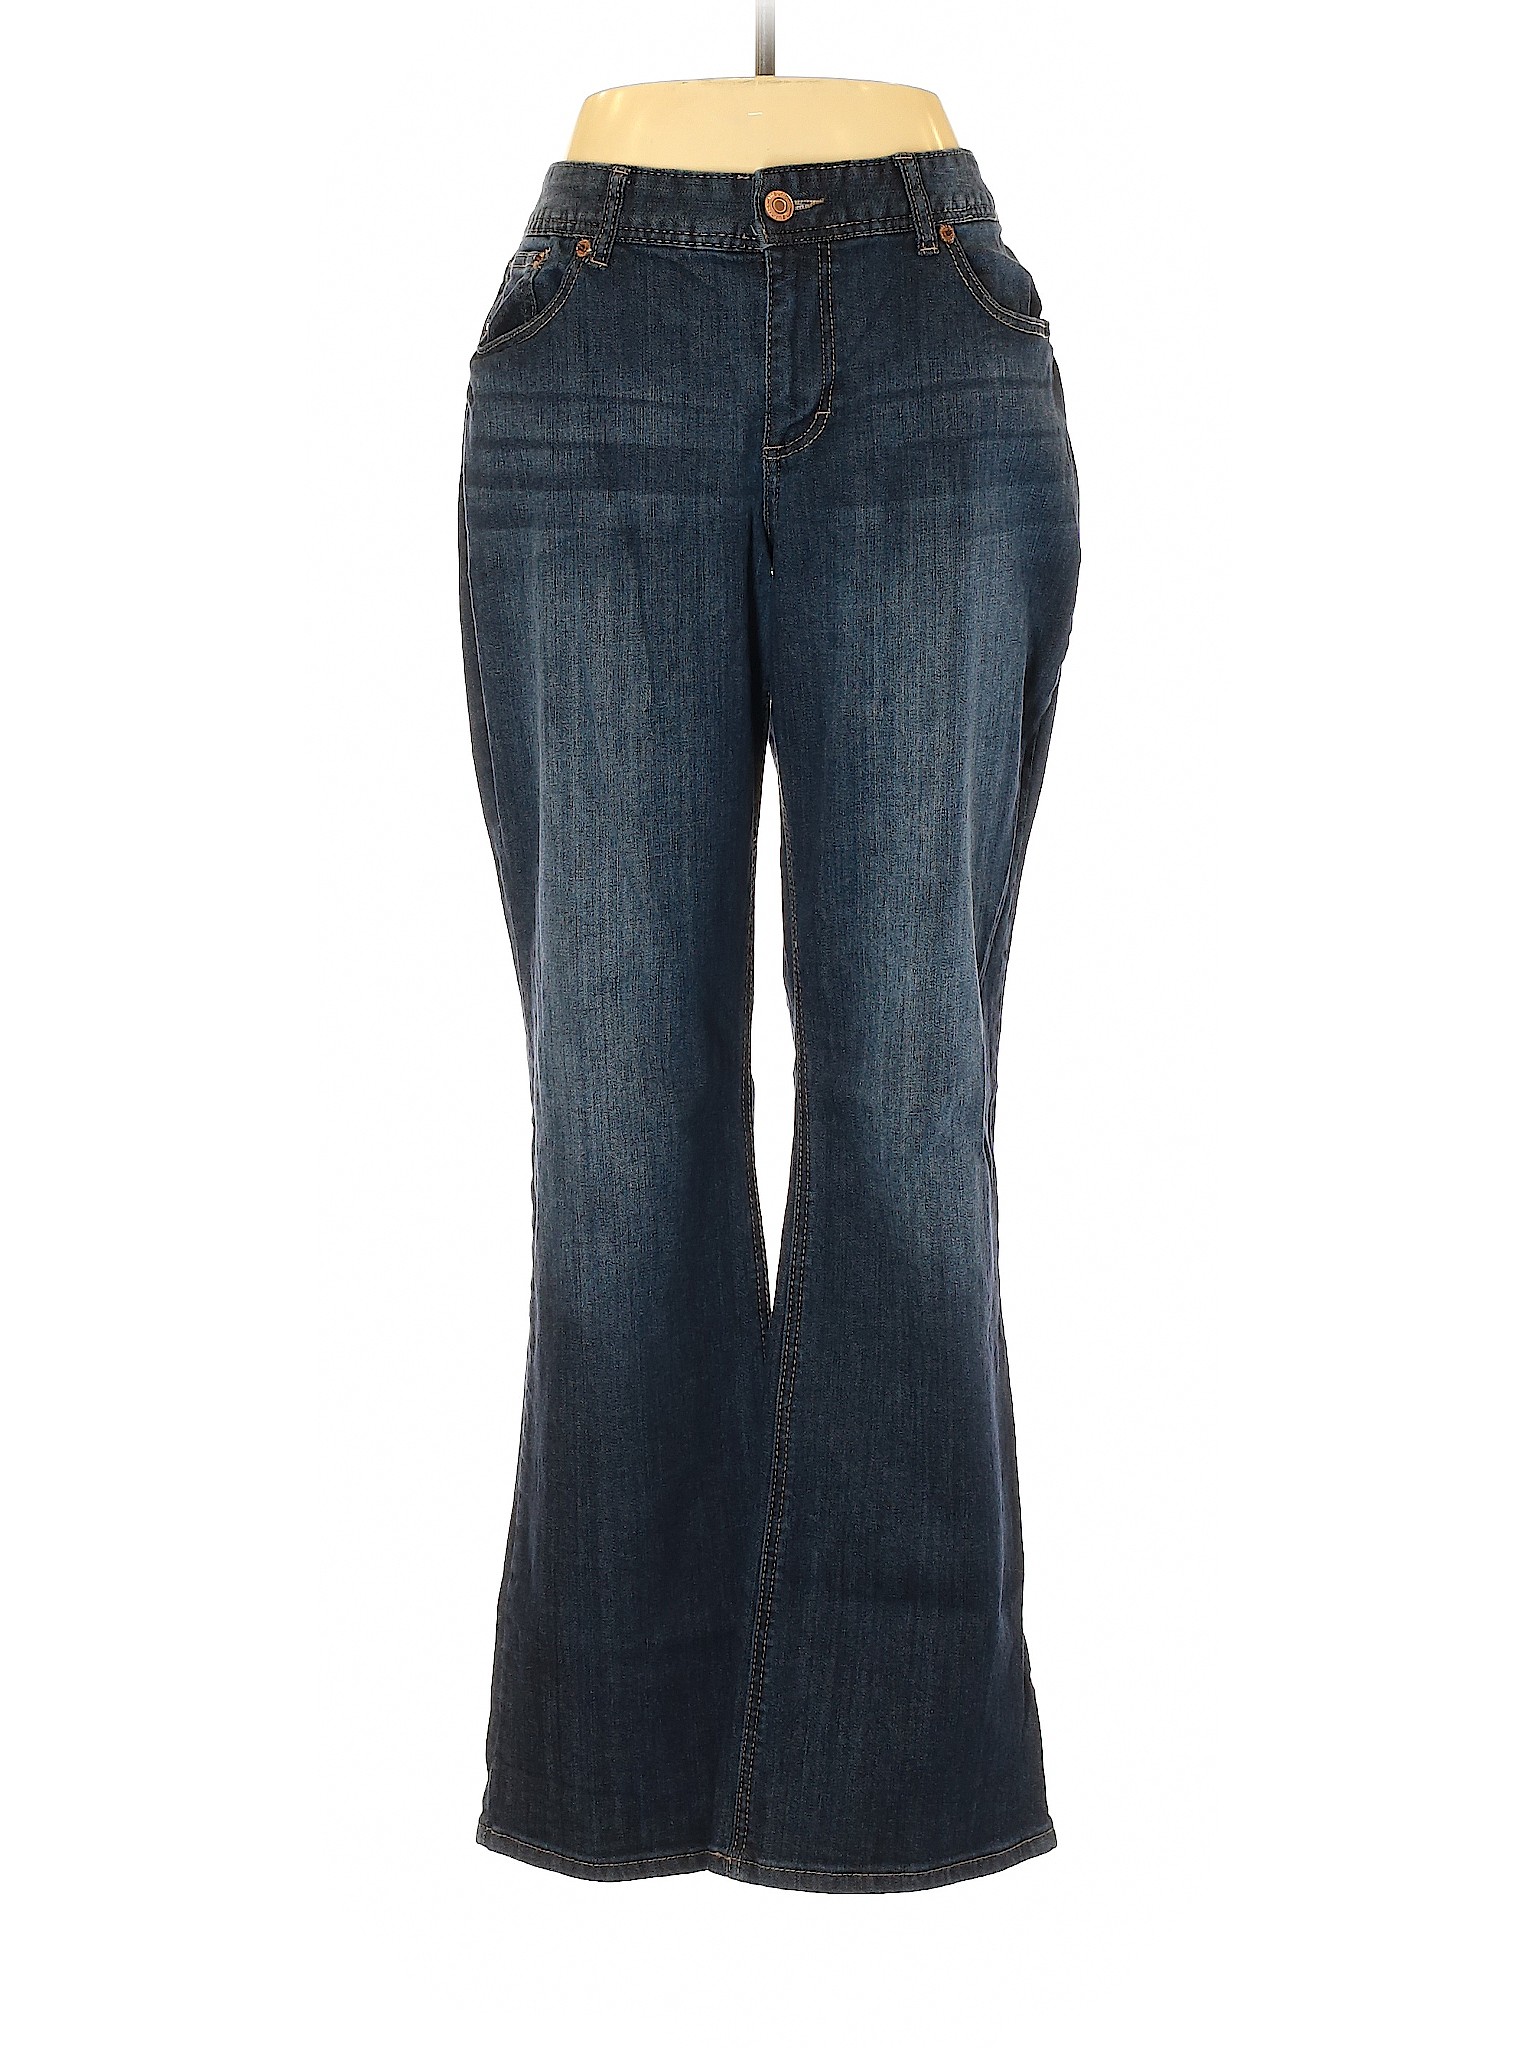 Maurices Women Blue Jeans 13 | eBay